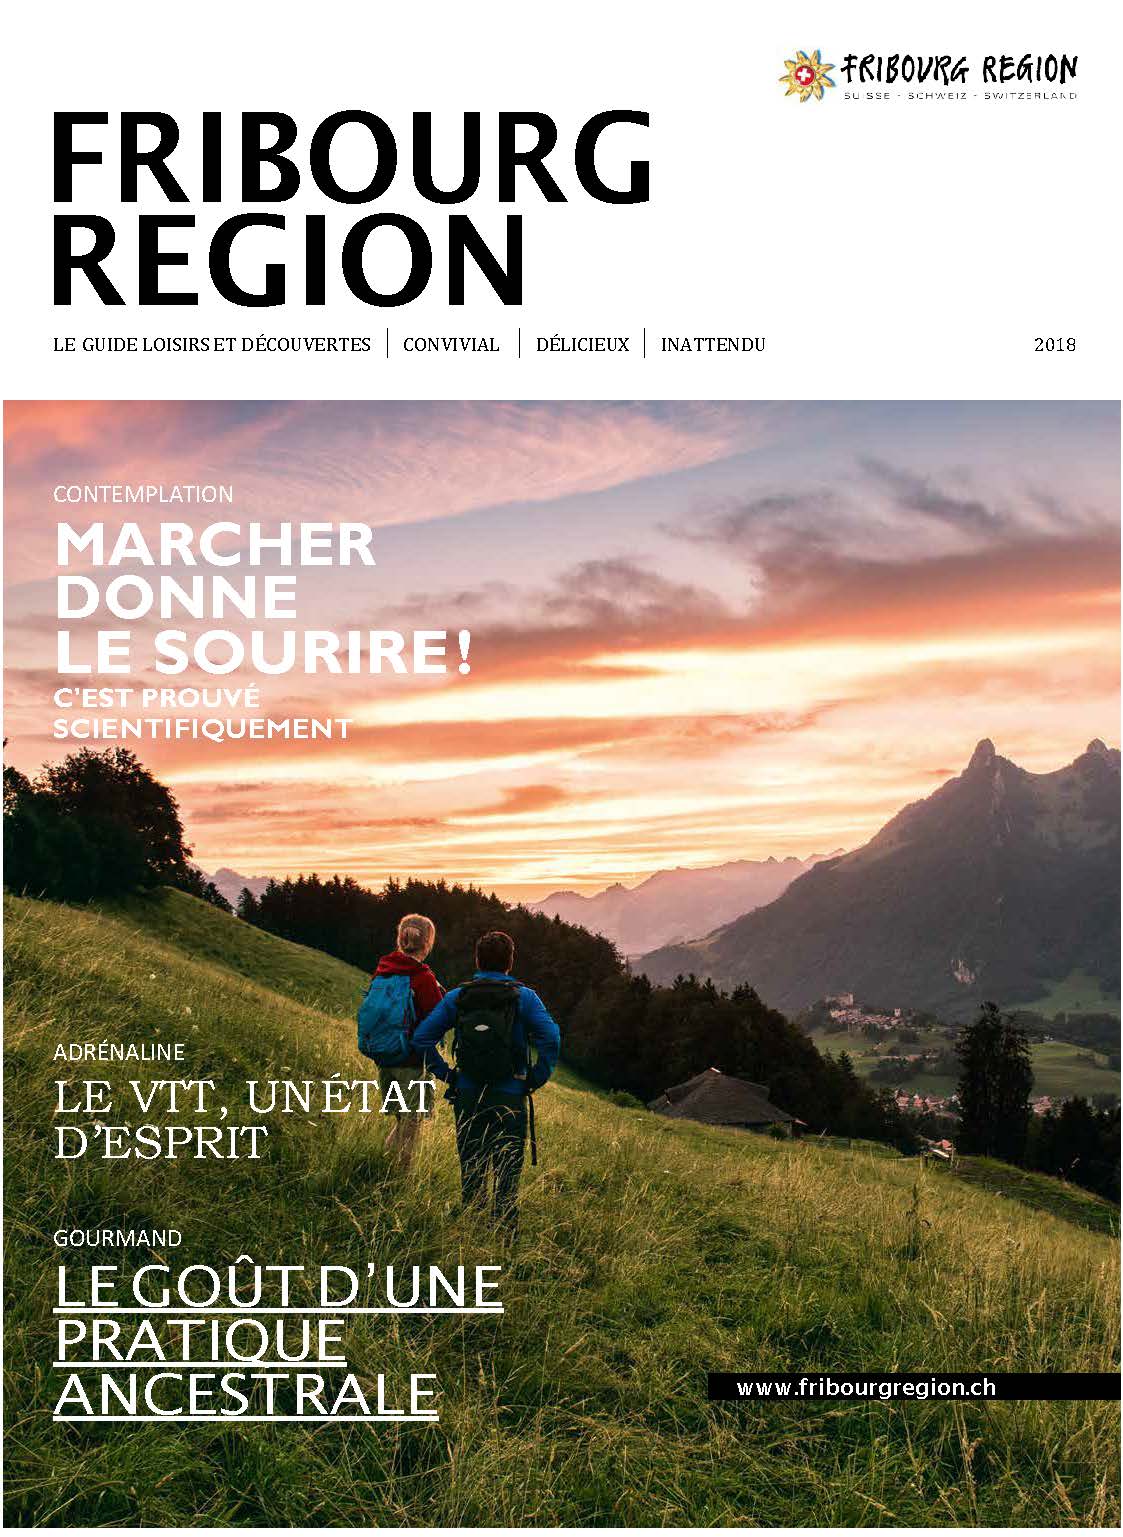 Fribourg region magazine